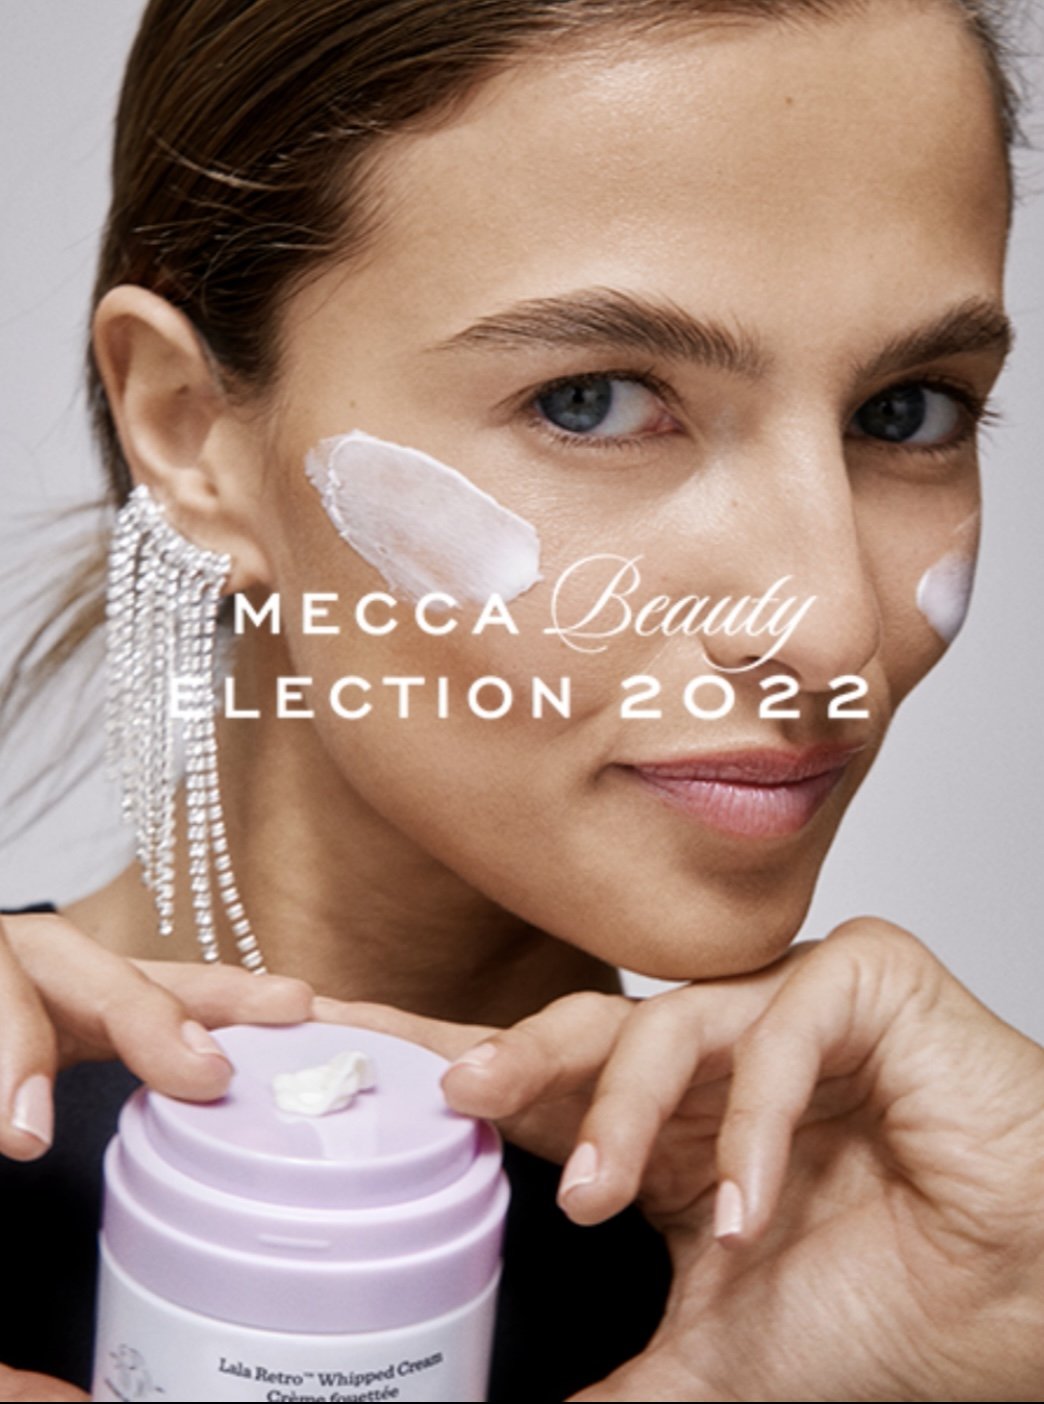 Mecca Beauty Election '22 By Charles Dennington